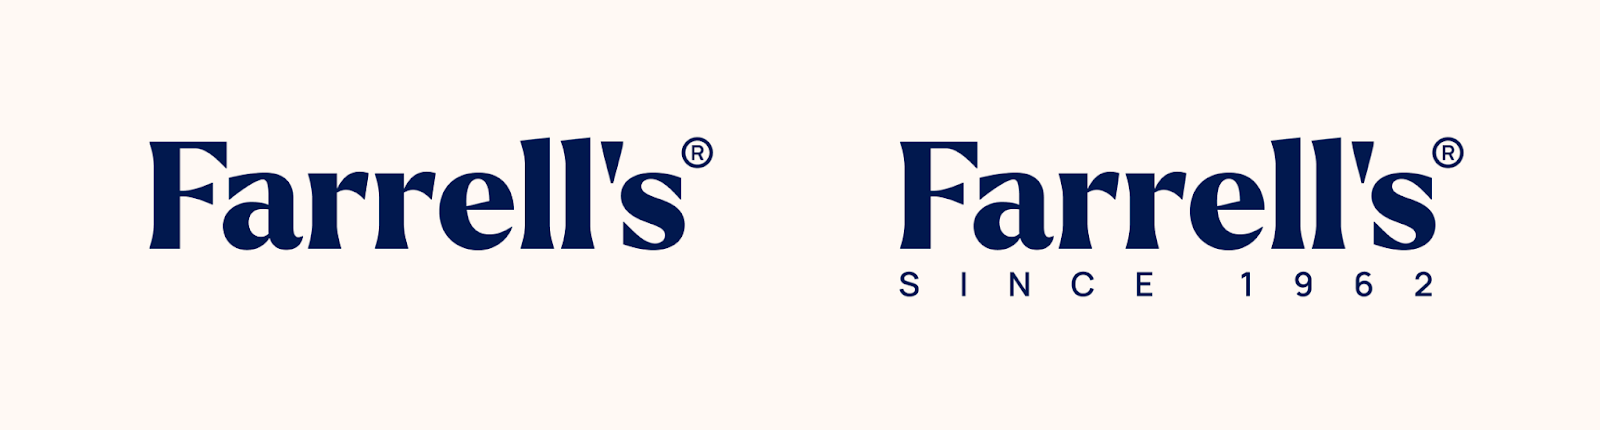 Screenshot of two Farrell's logos, text versions.